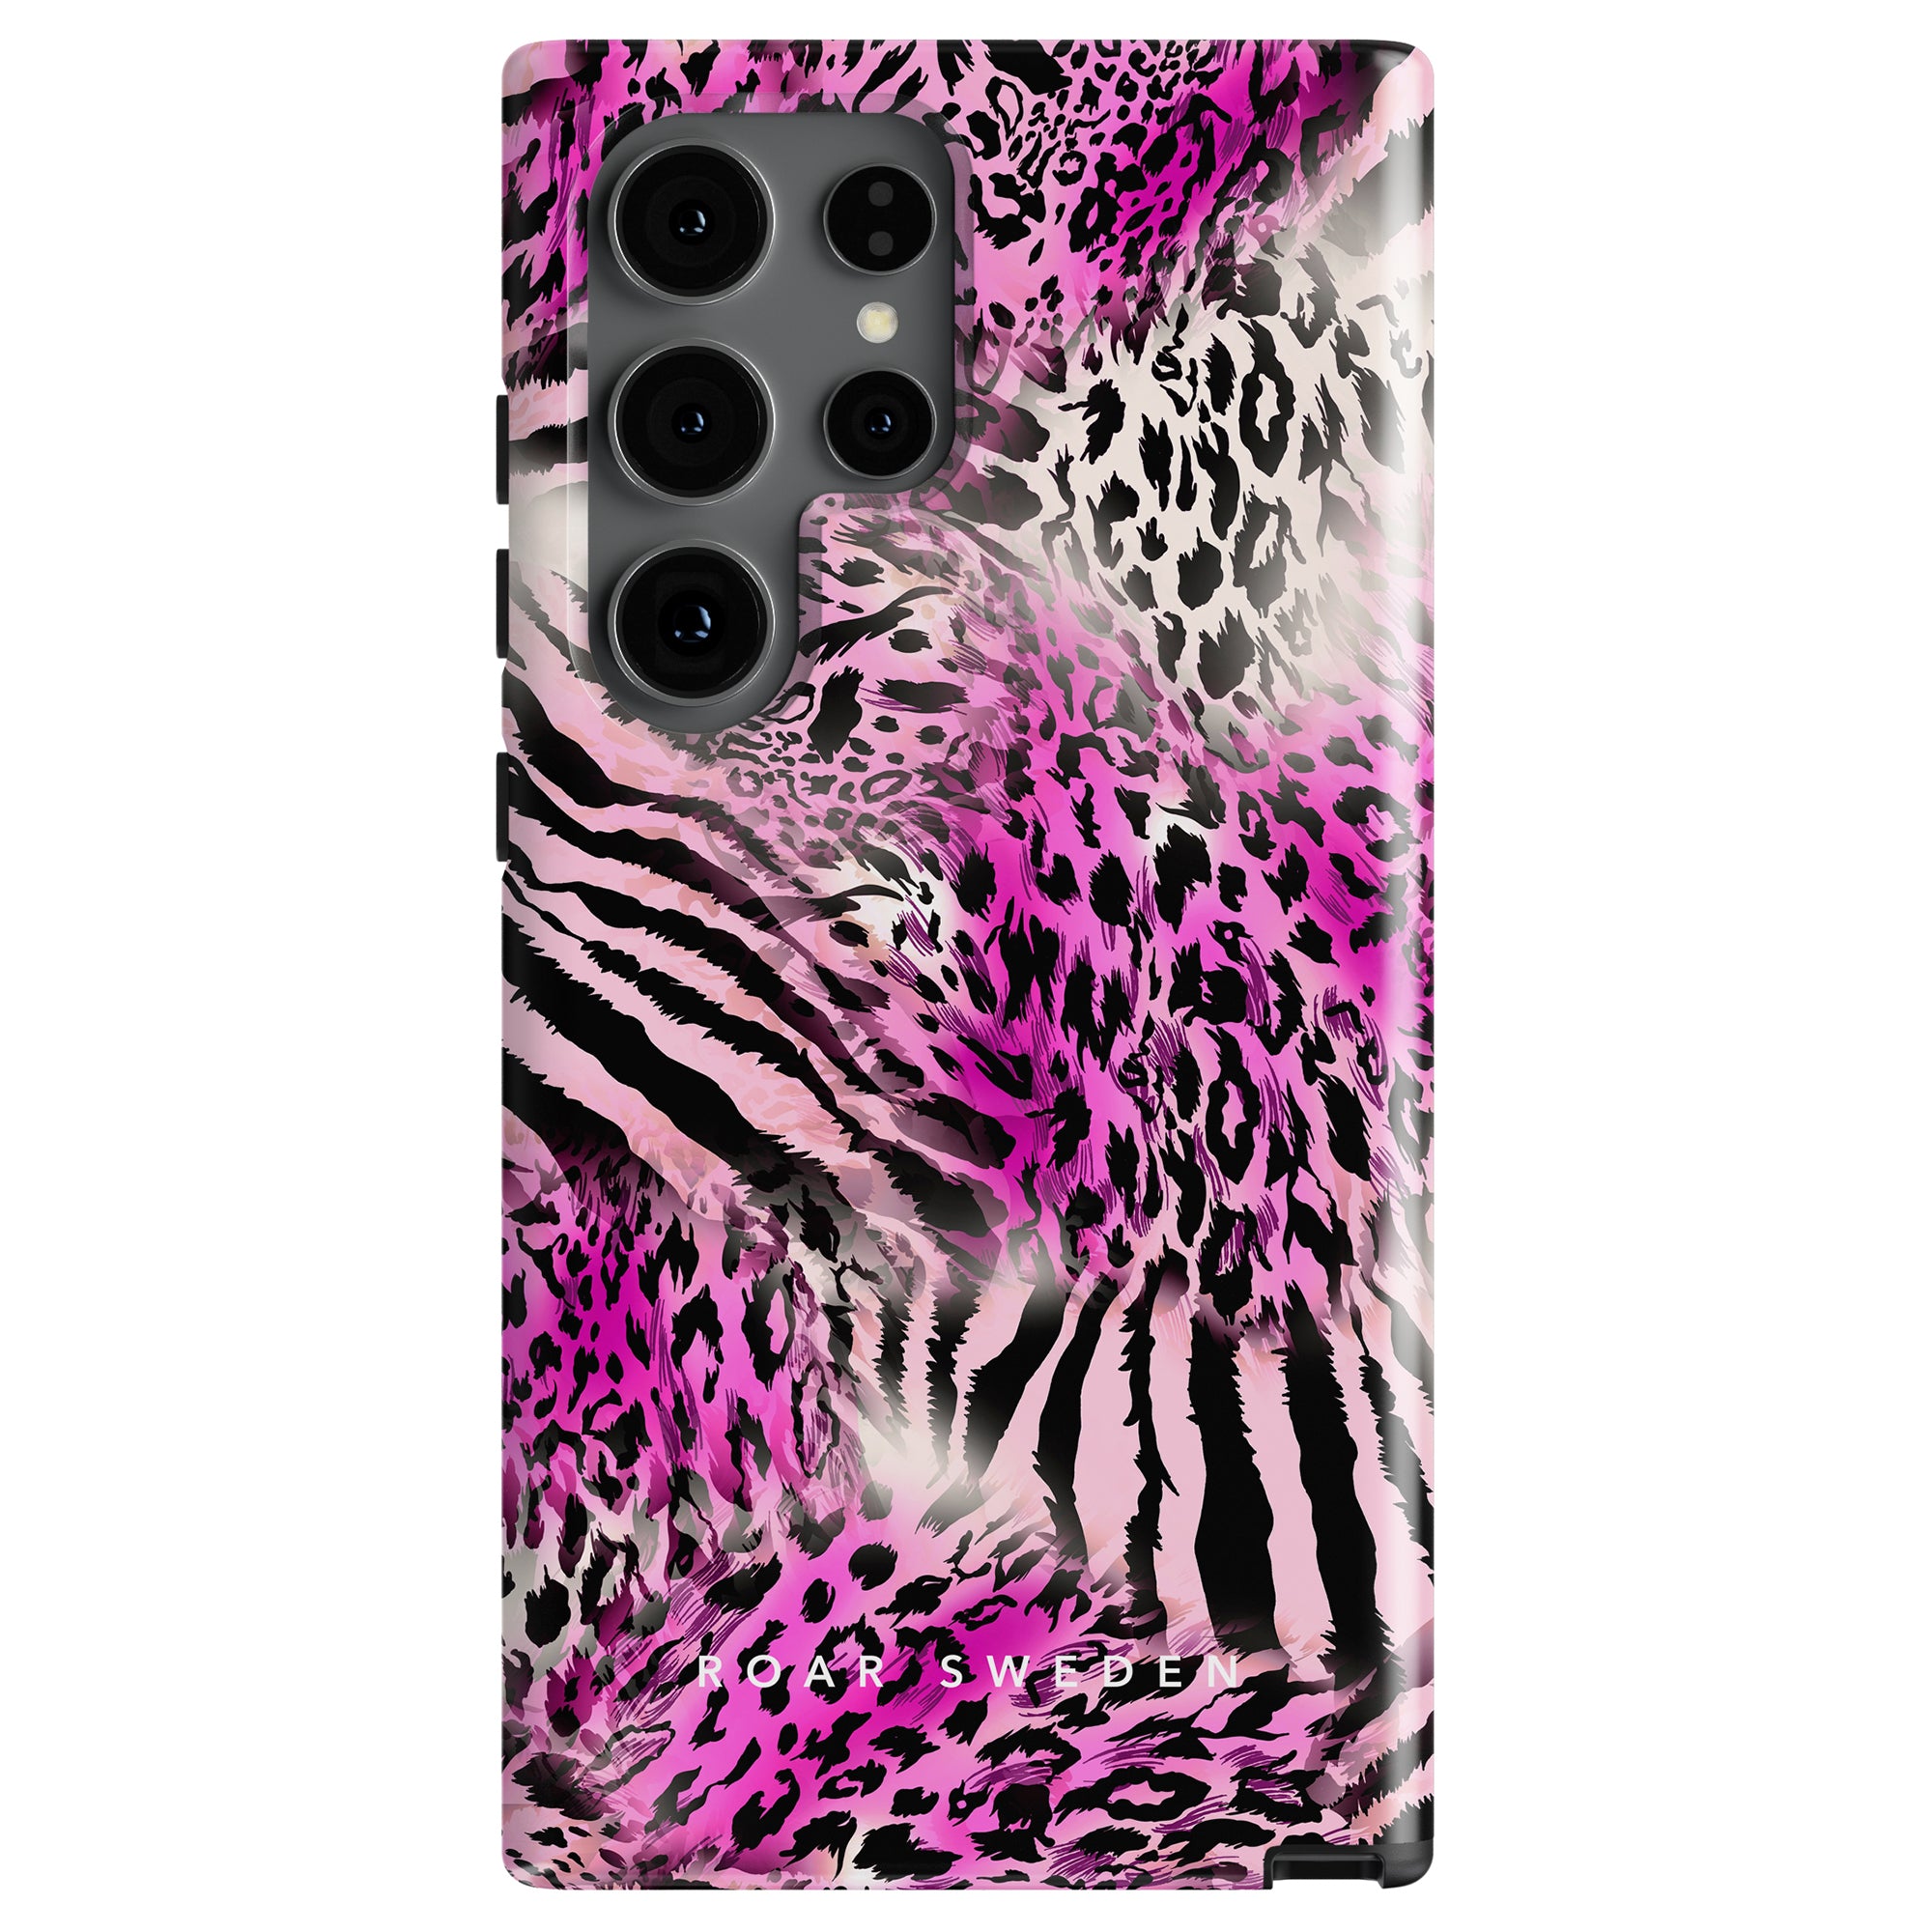 A smartphone with a Savannah Fuchsia - Tough Case featuring zebra and cheetah prints in vibrant pink, purple, and black colors - a true Roar Sweden original.